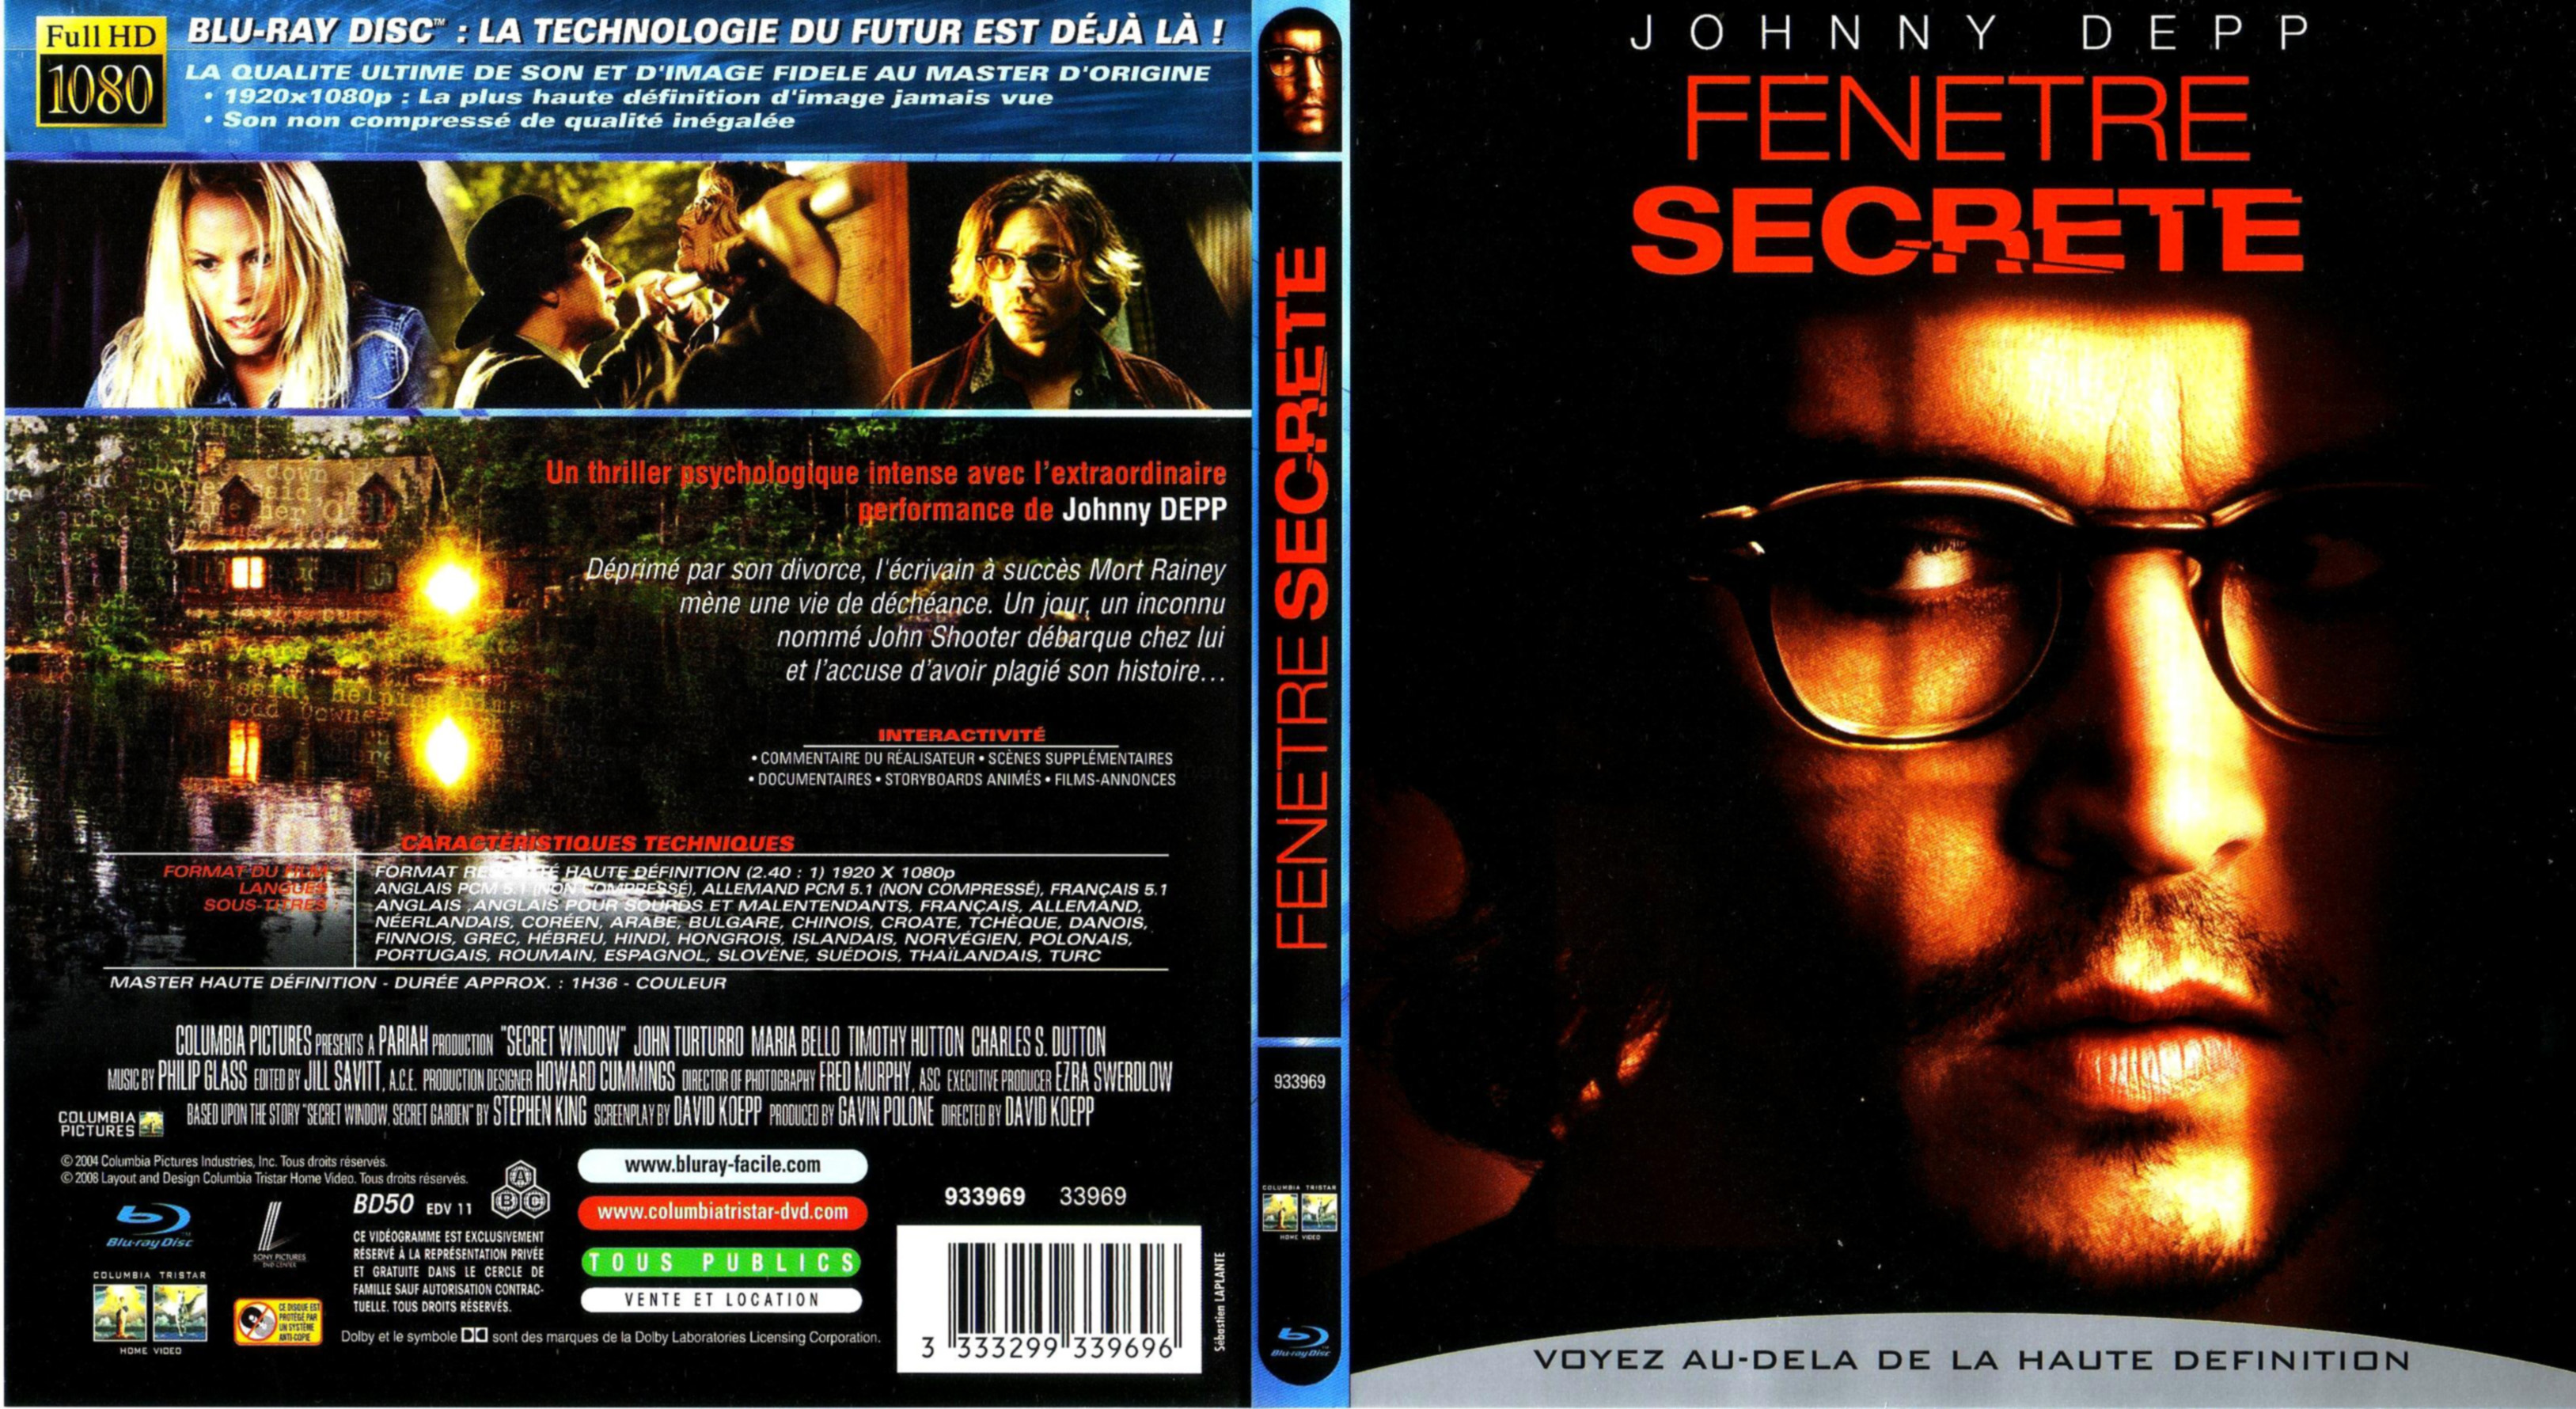 Jaquette DVD Fenetre secrete (BLU-RAY) v2